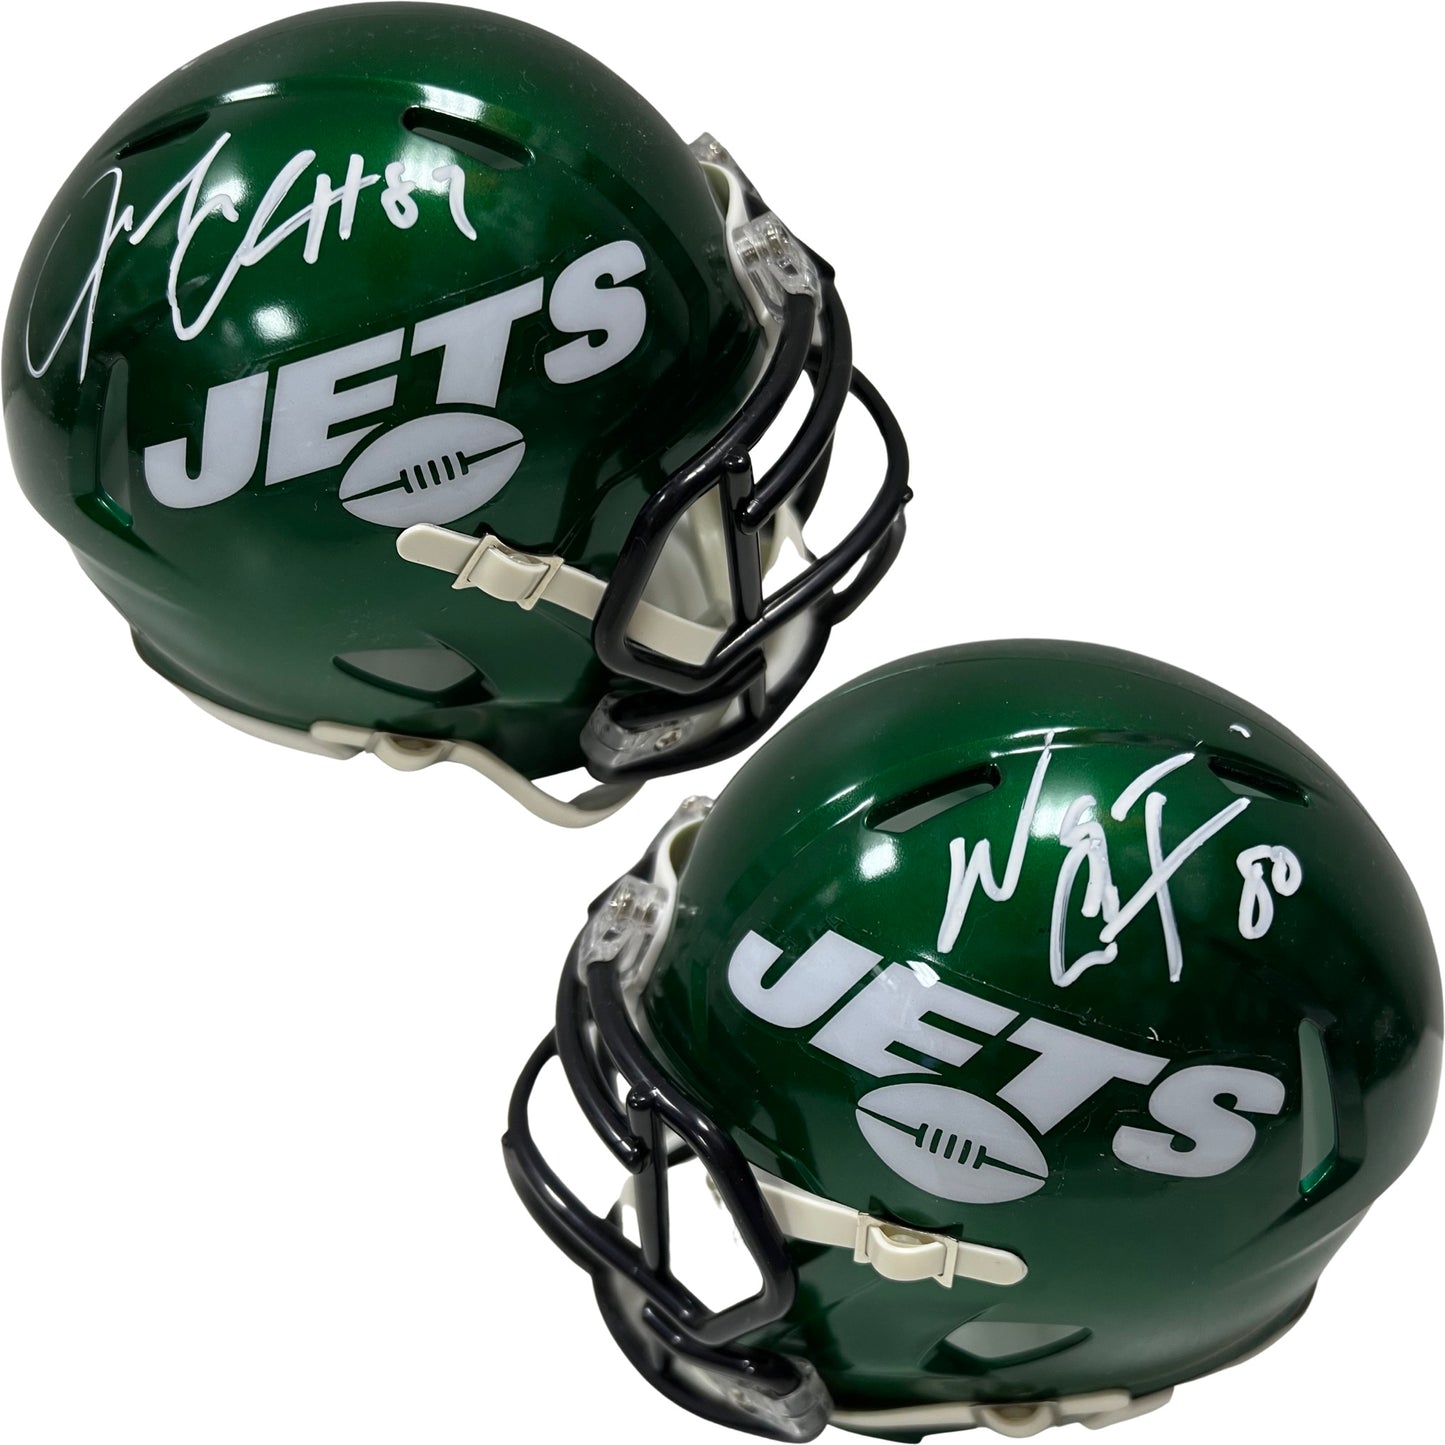 Wayne Chrebet & Laveranues Coles Autographed New York Jets Green Speed Mini Helmet Steiner CX